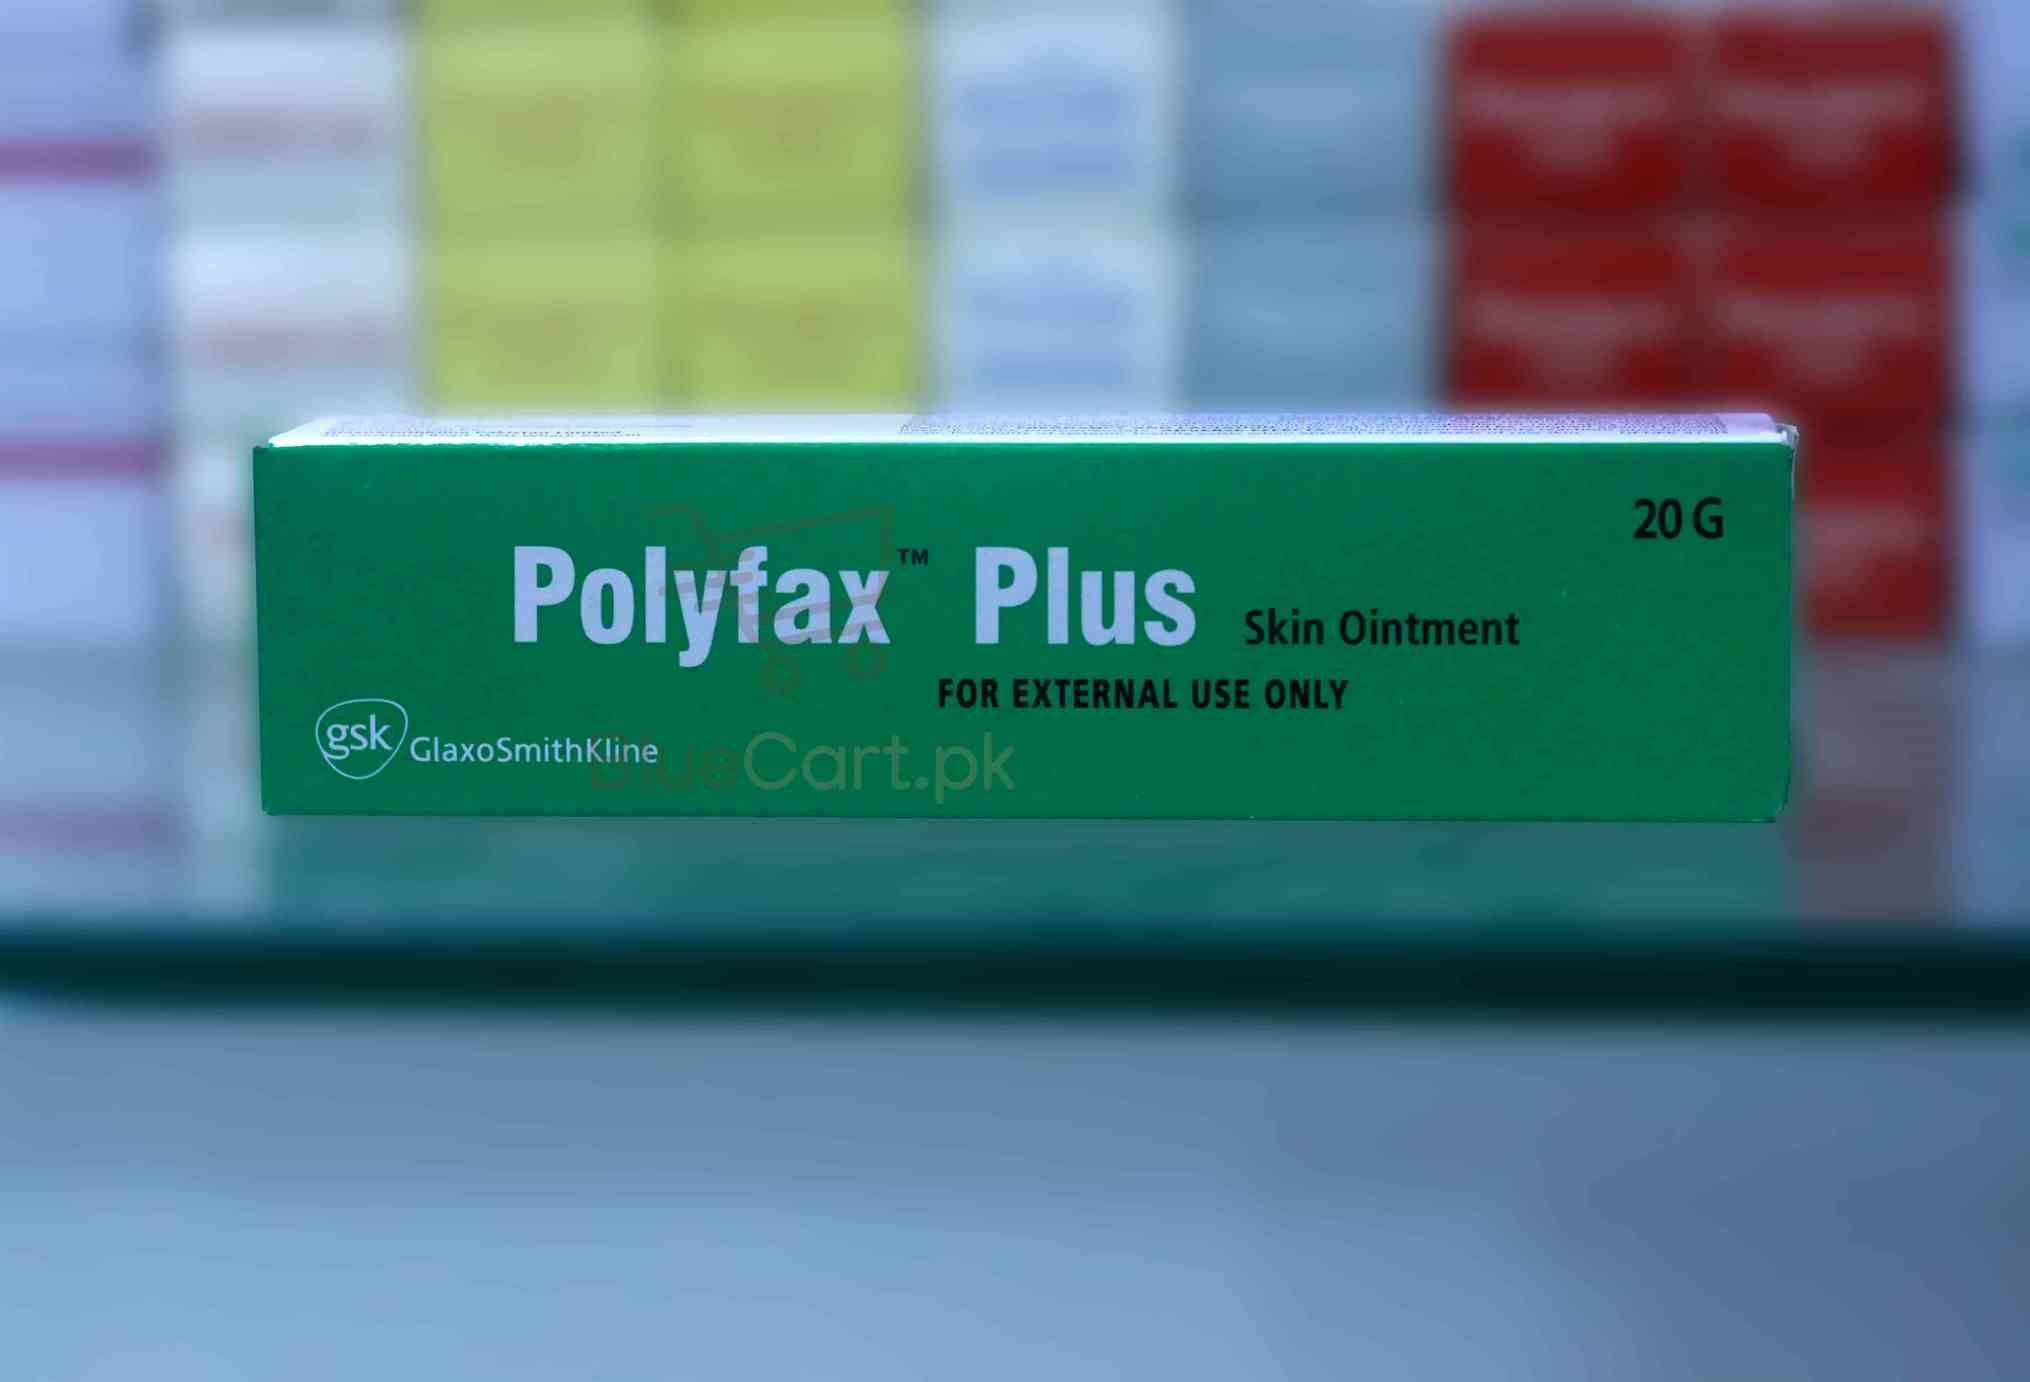 Polyfax Plus Ointment